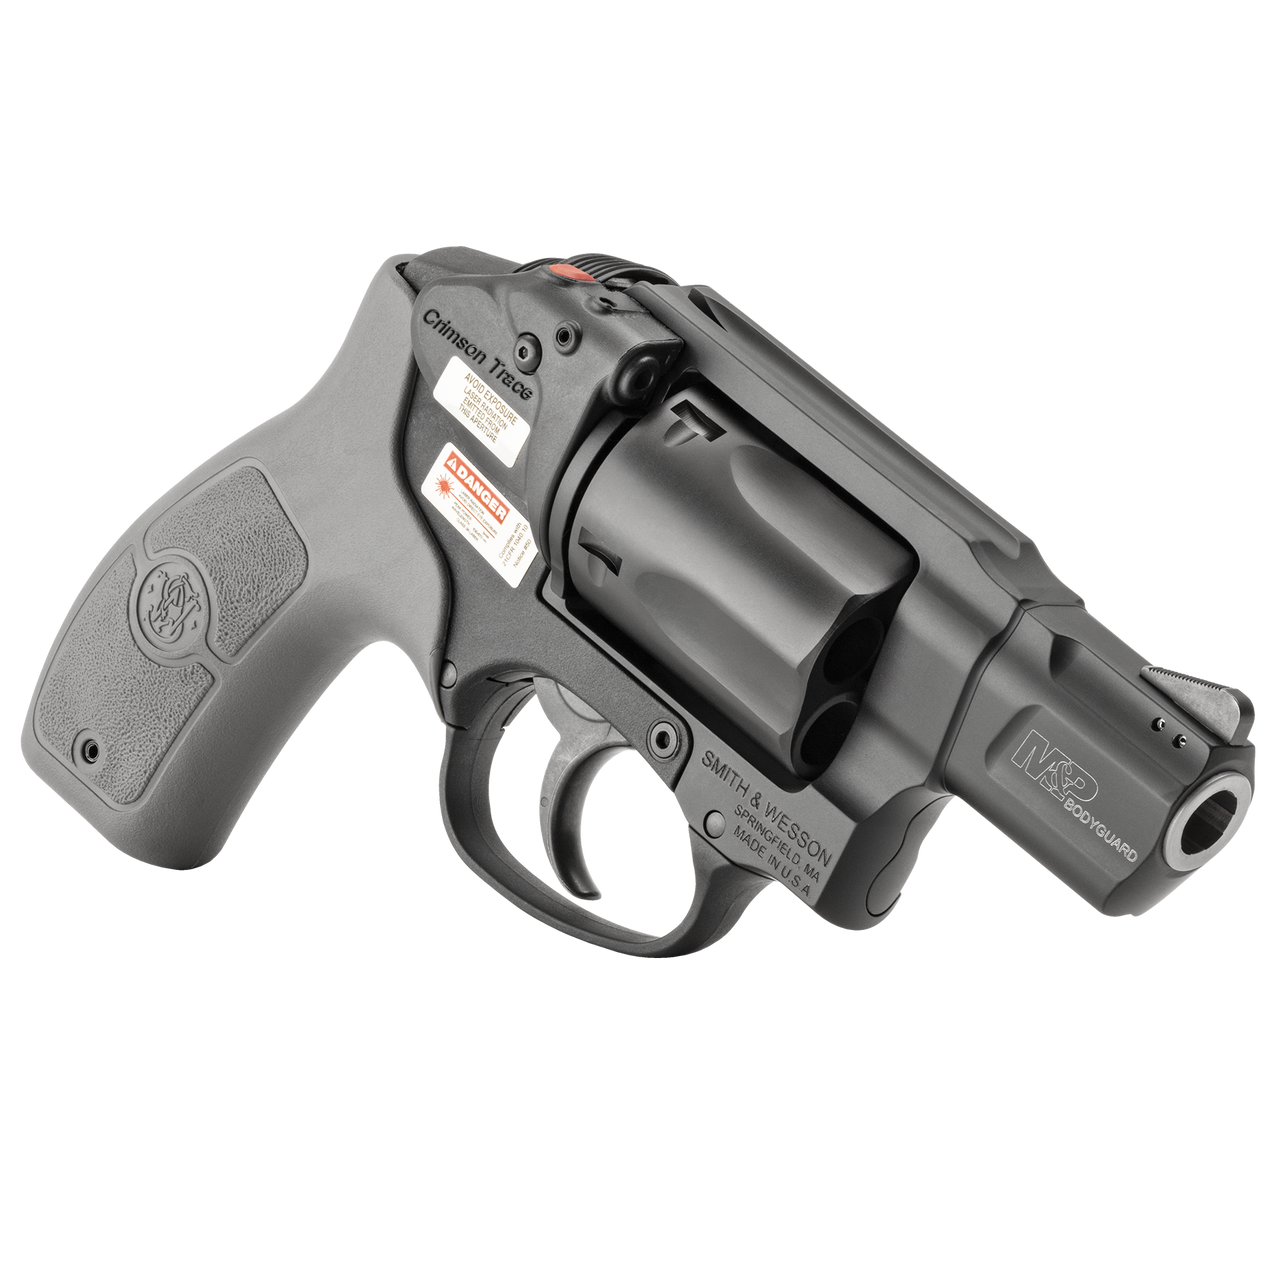 Buy Smith & Wesson M&P Bodyguard 38 Integrated Crimson Trace Laser Compliant Revolver Online